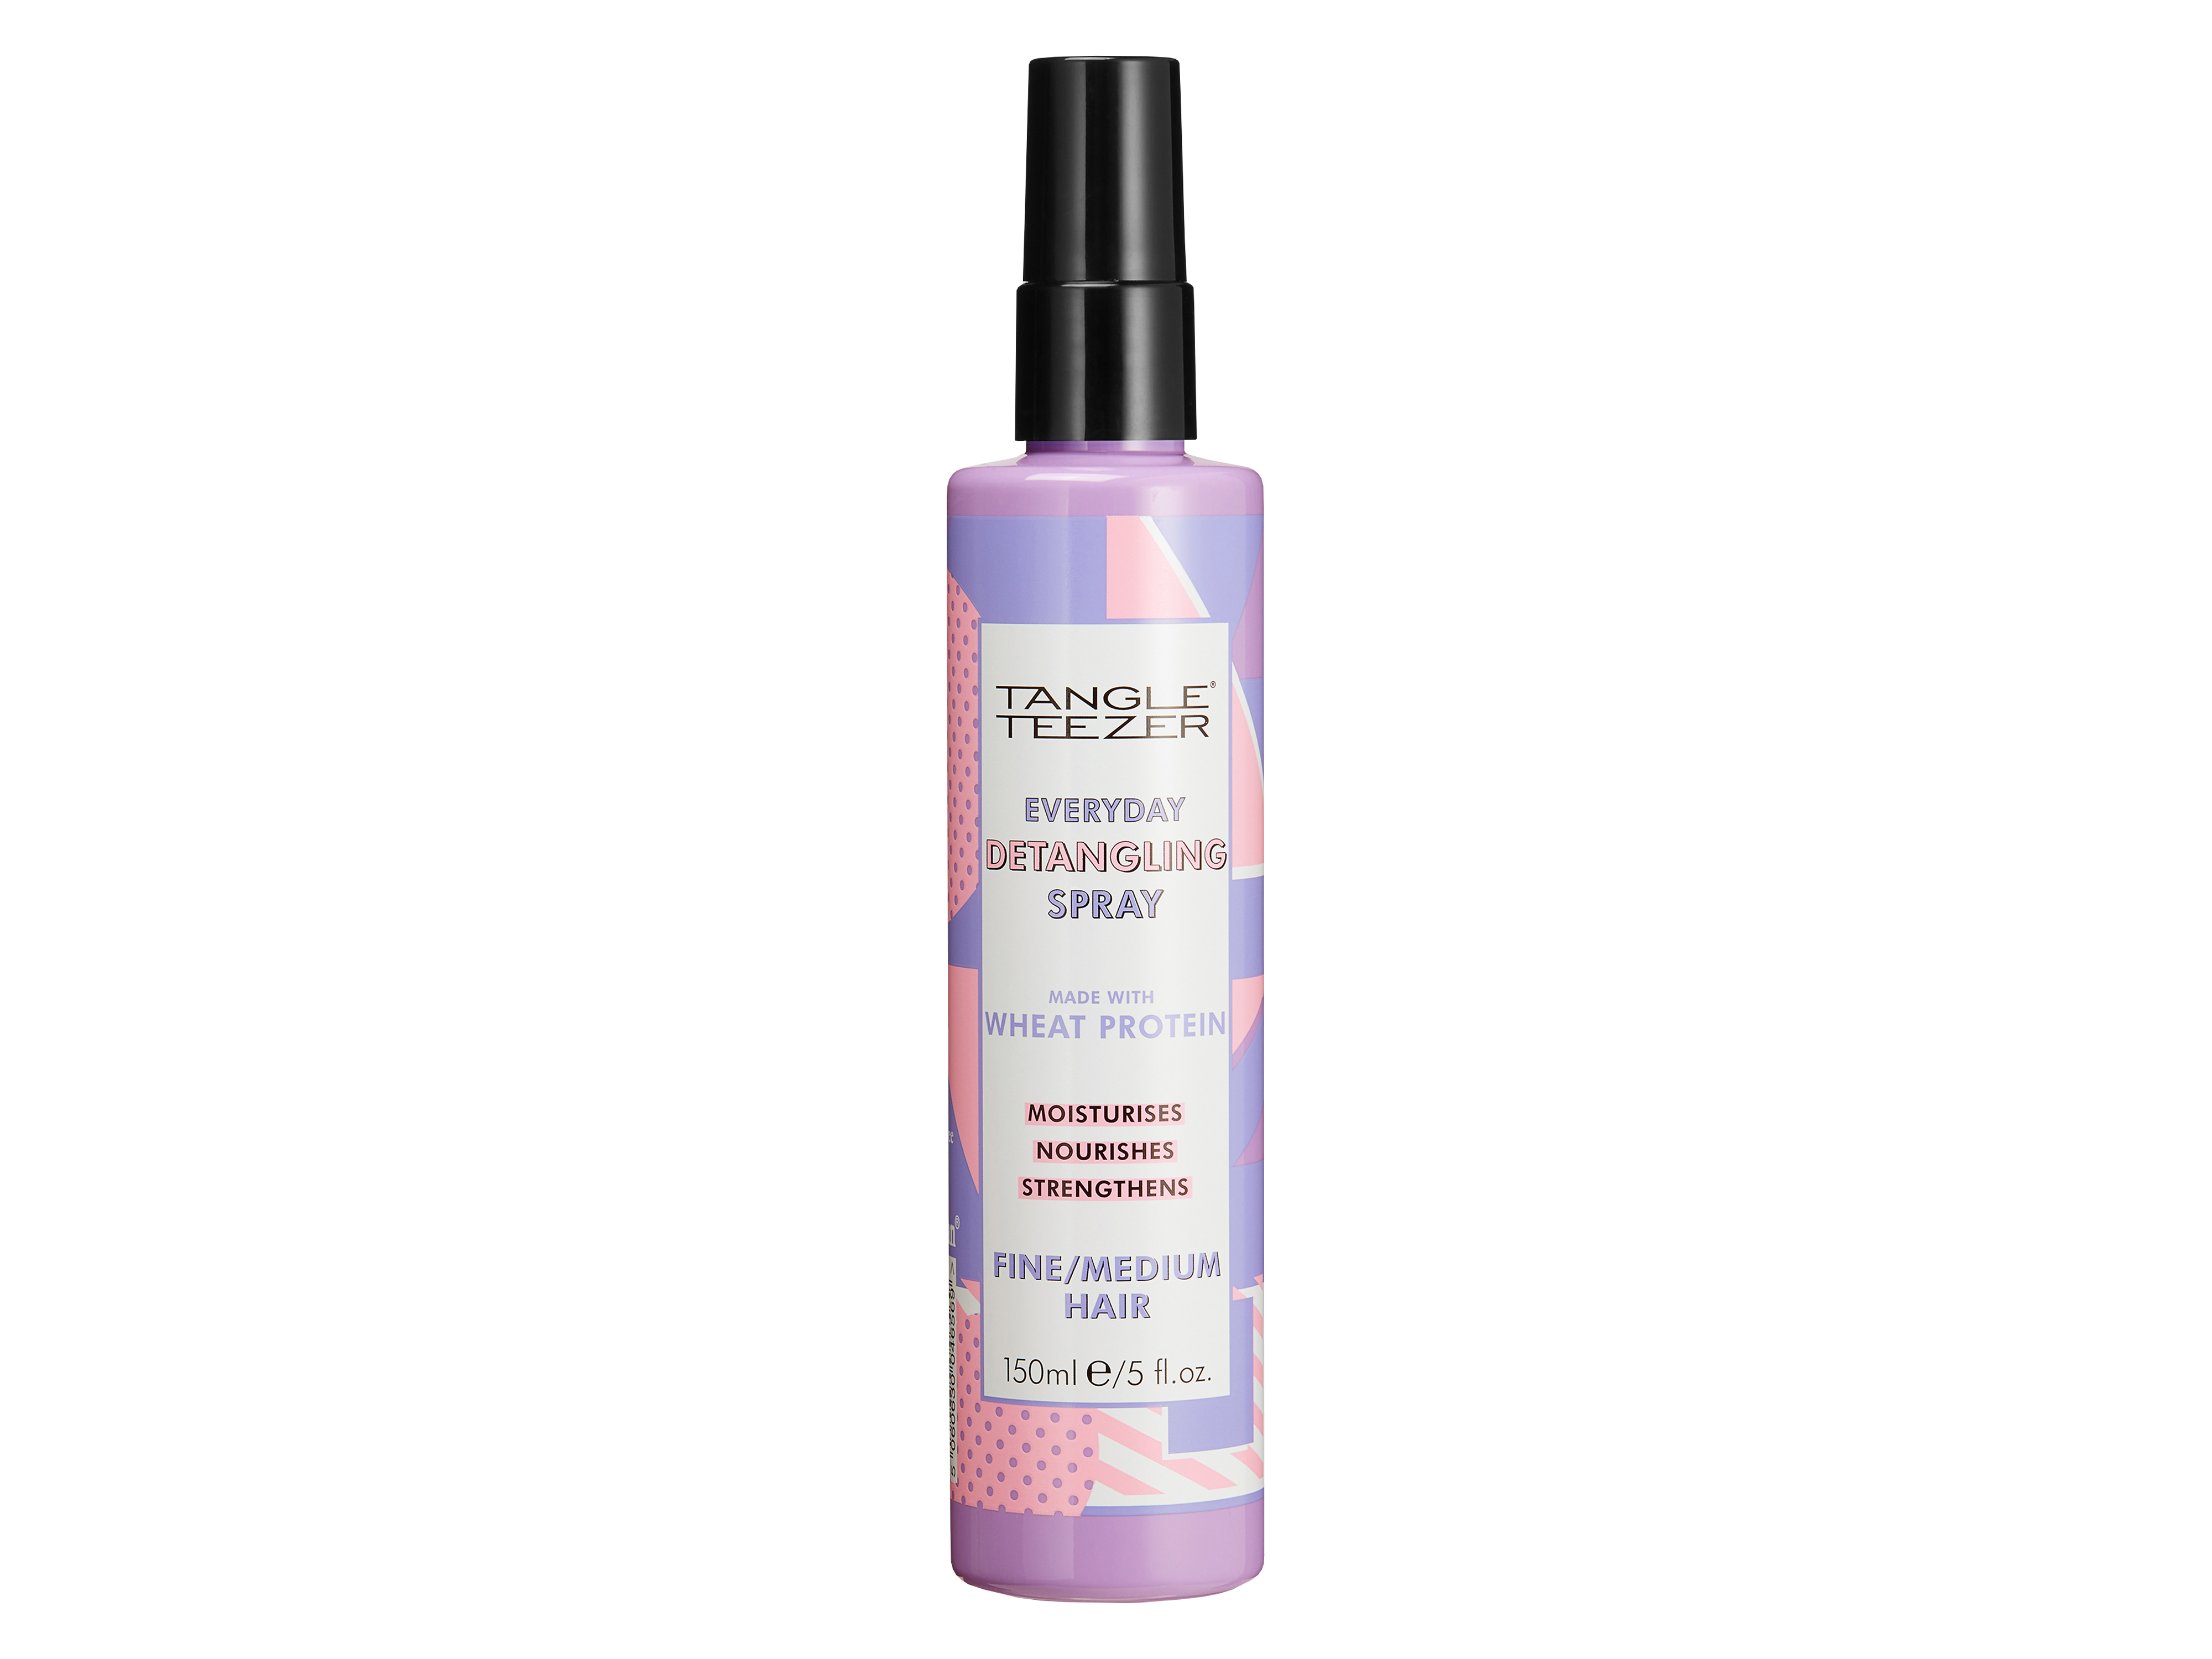 Tangle Teezer Everyday Detangling, Spray fine/medium hair, 150 ml.